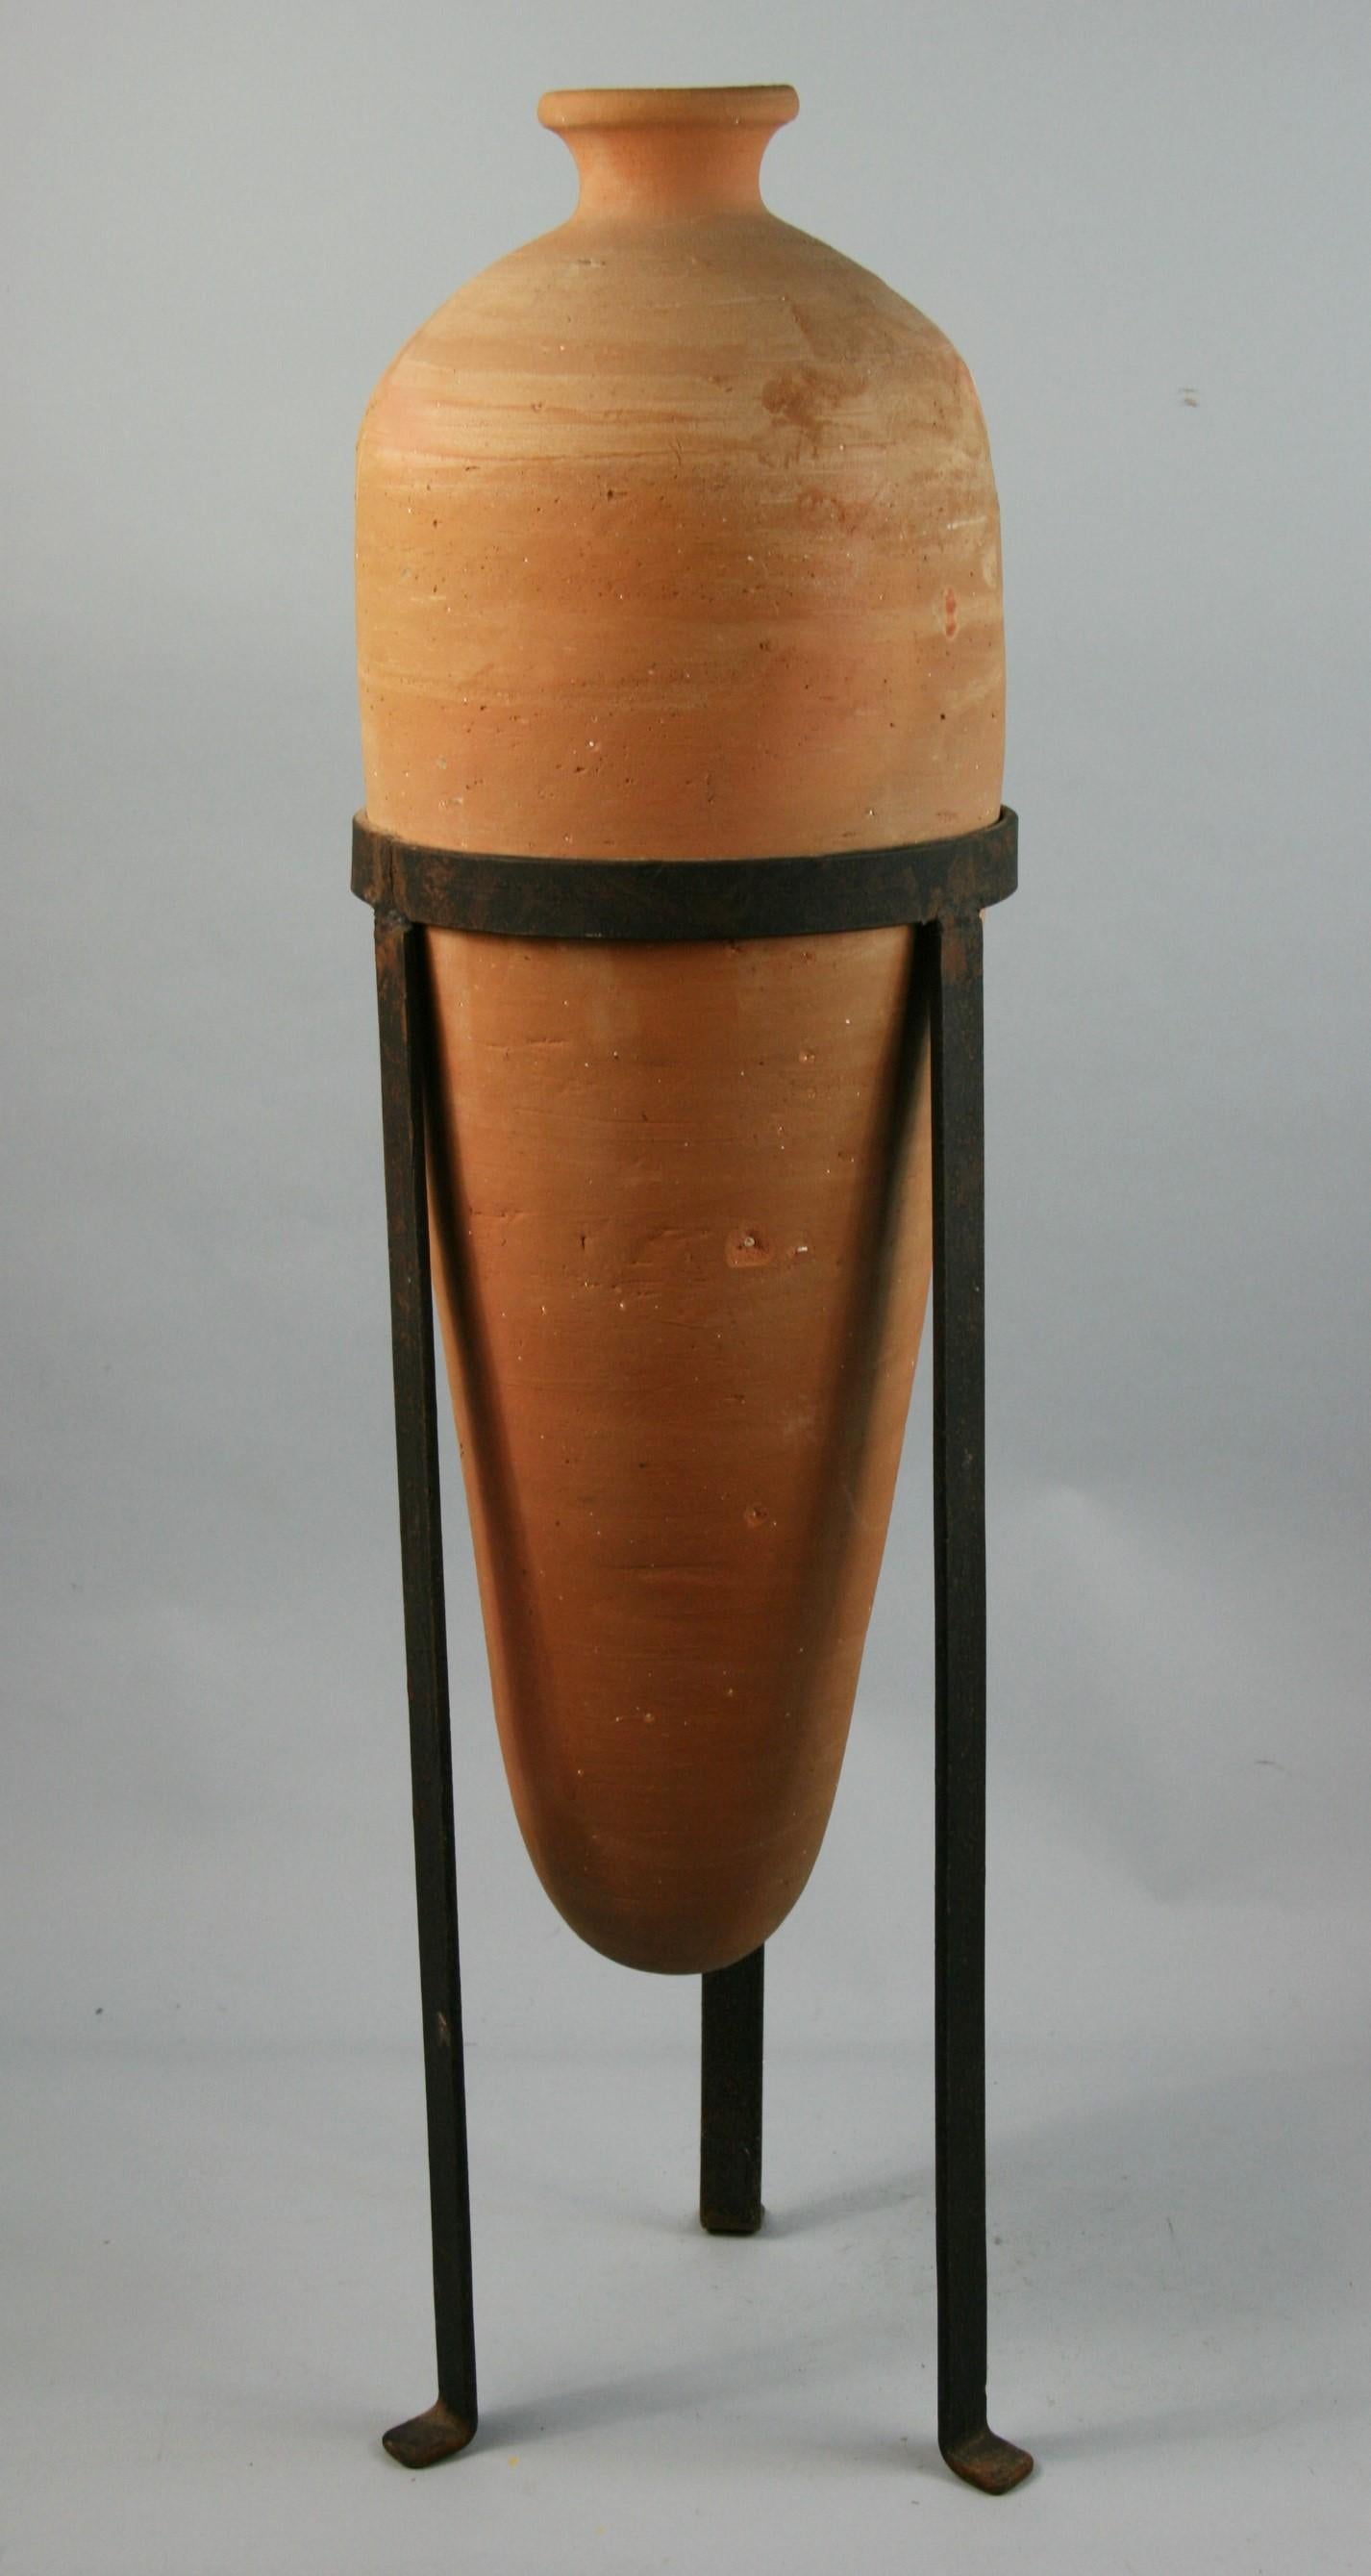 Italian terracotta urn in a custom iron base.